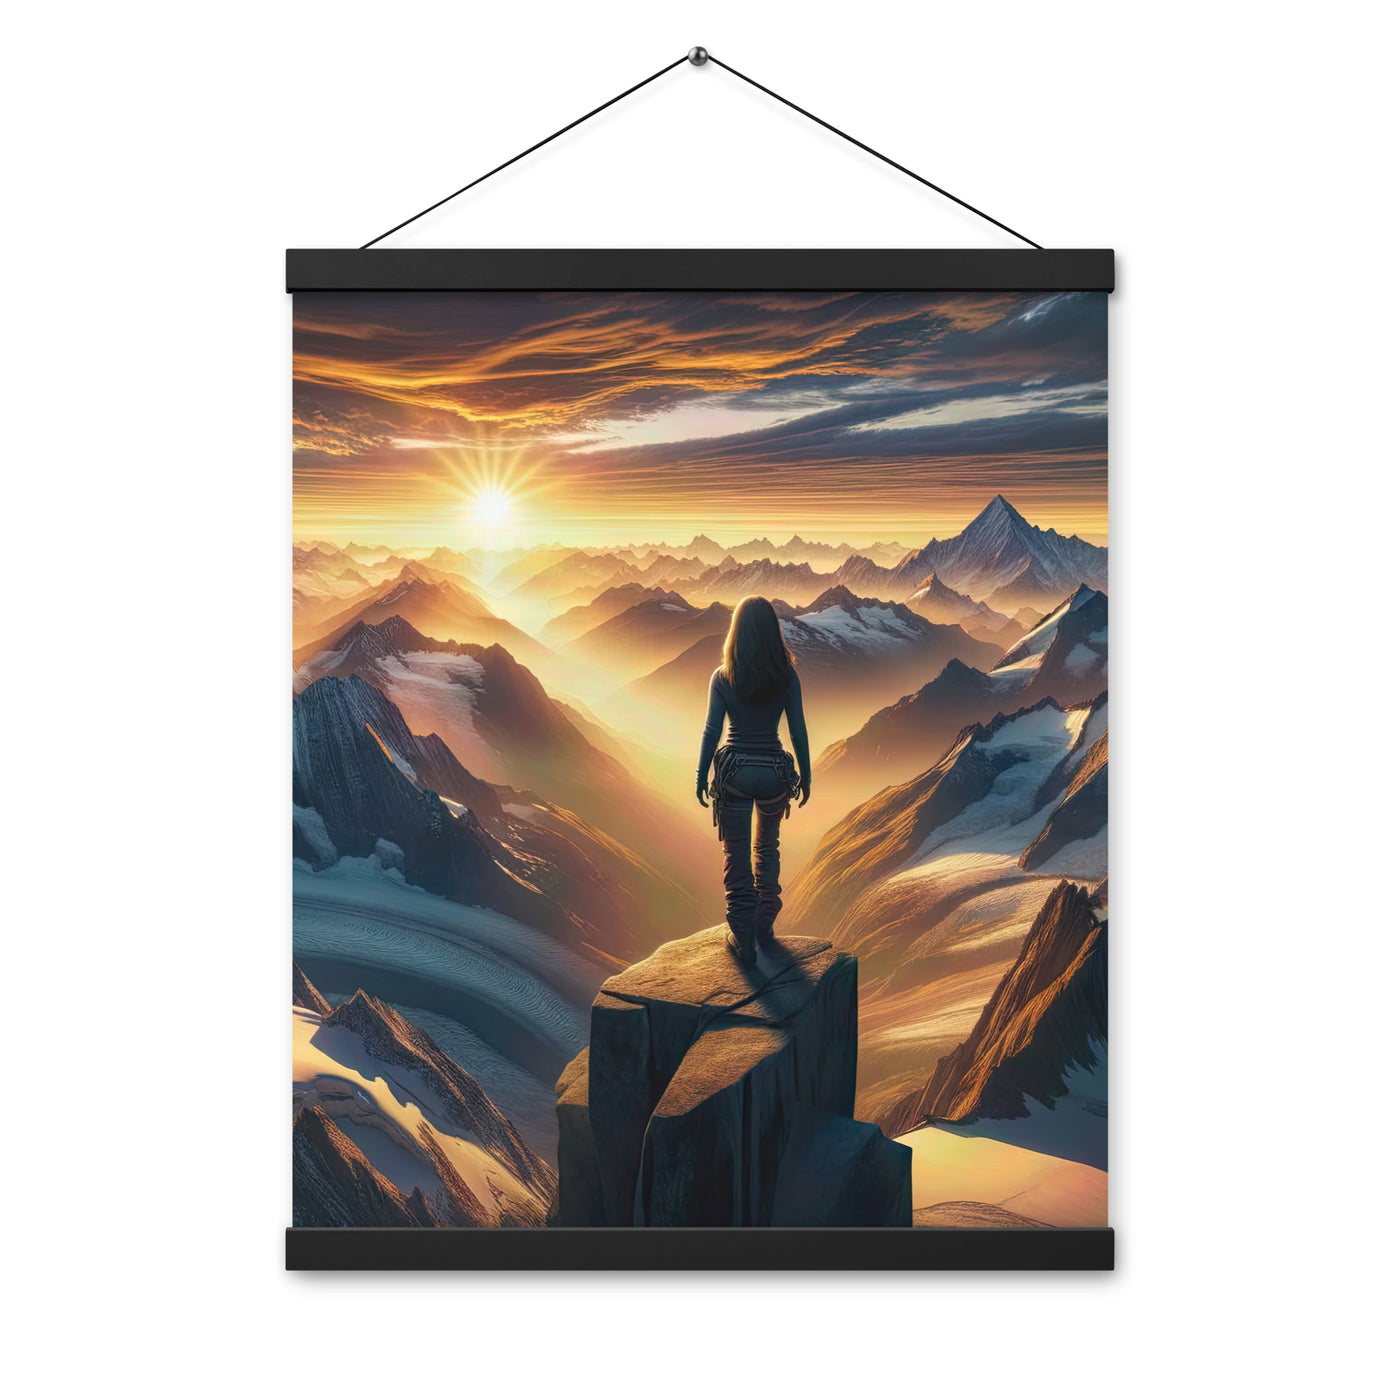 Fotorealistische Darstellung der Alpen bei Sonnenaufgang, Wanderin unter einem gold-purpurnen Himmel - Enhanced Matte Paper Poster With wandern xxx yyy zzz 40.6 x 50.8 cm